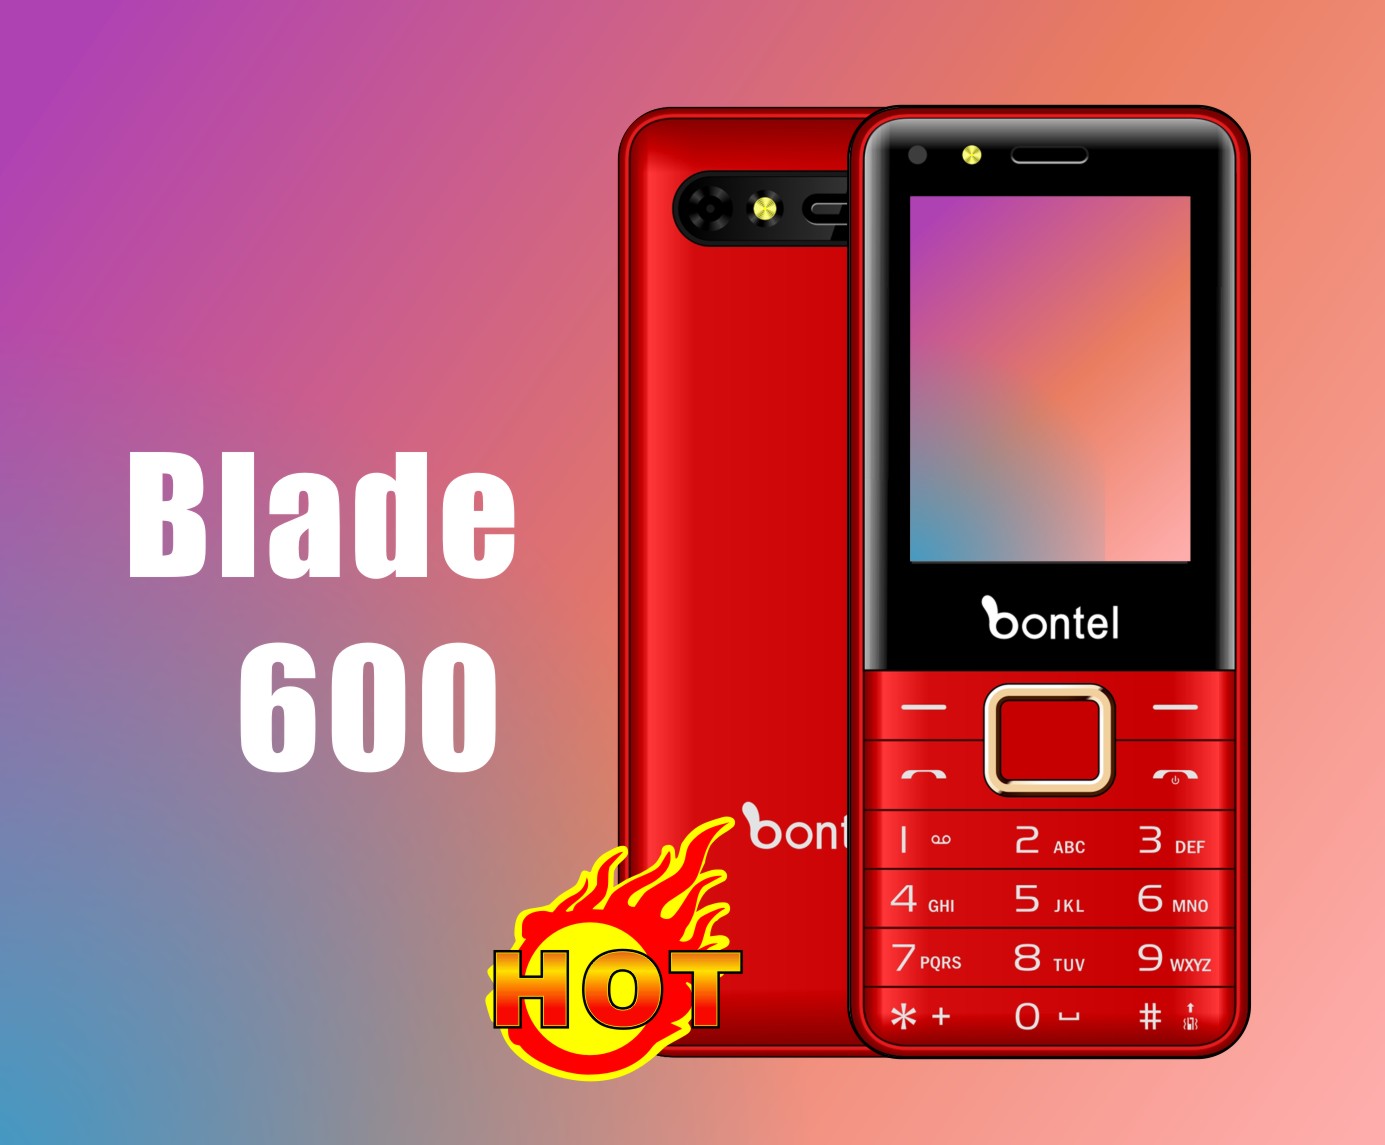 Blade 600